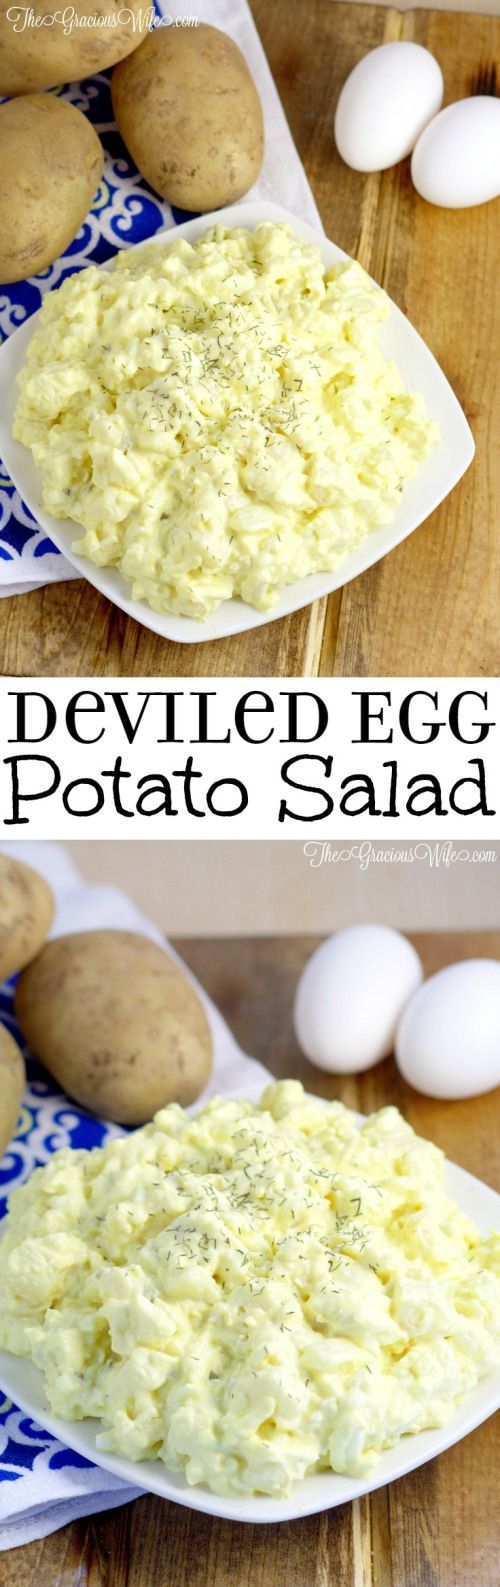 Deviled Egg Potato Salad Recipe – Easy potato salad side dish recipe inspired by devil eggs. Perfect for BBQ, picnics, and